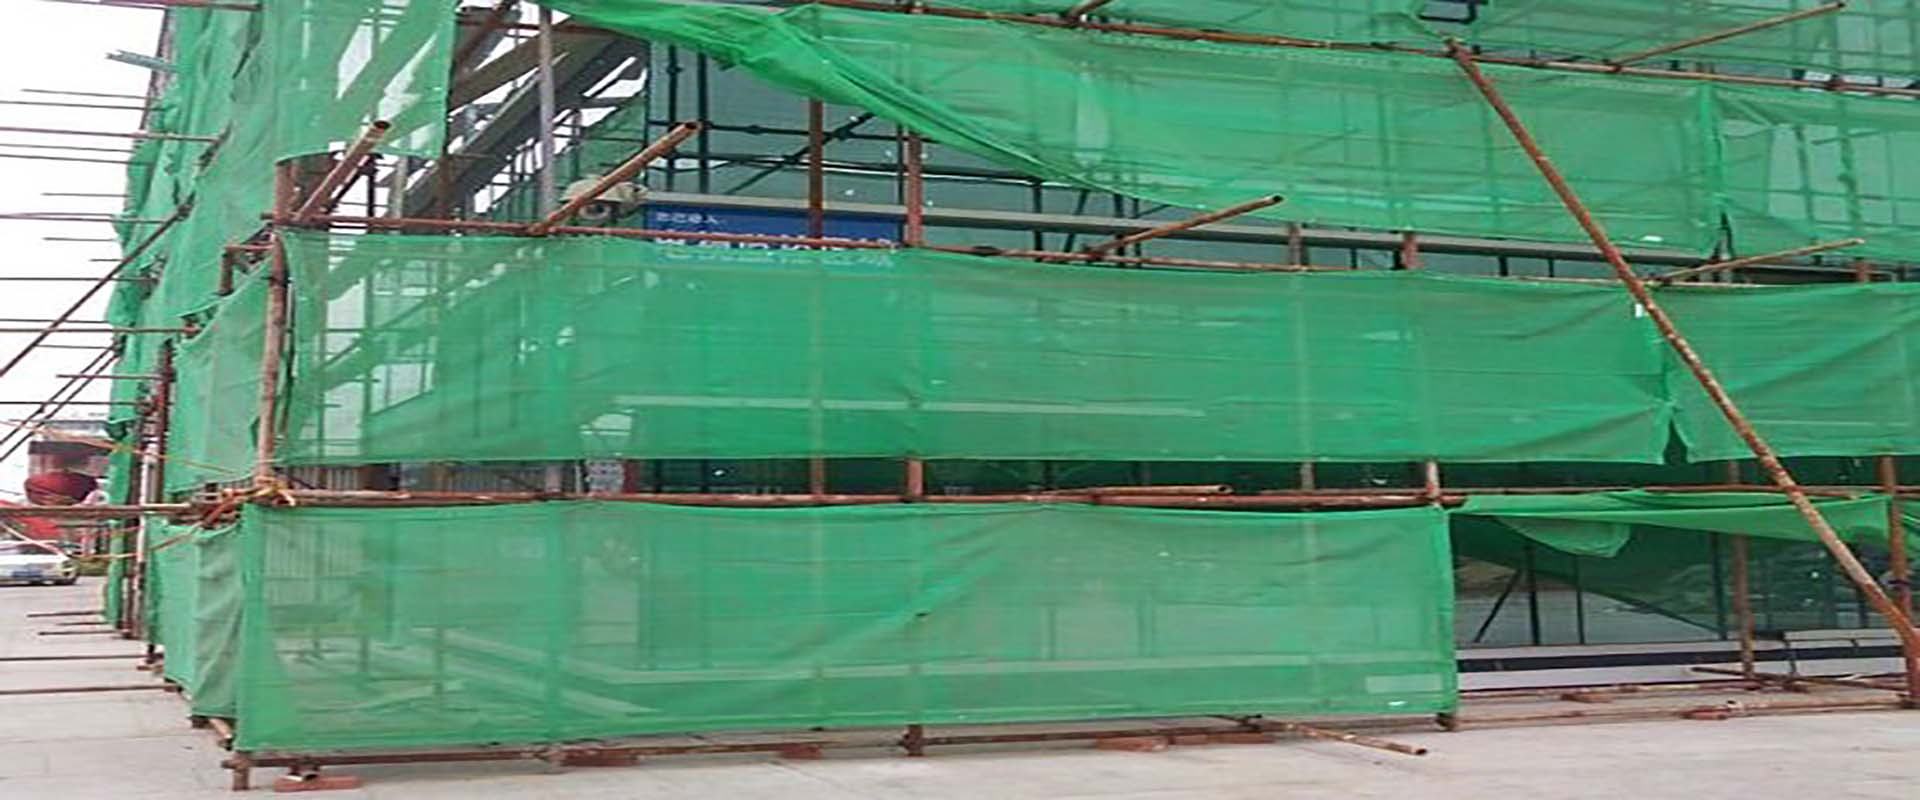 Construction Safety Net In vijayawada
